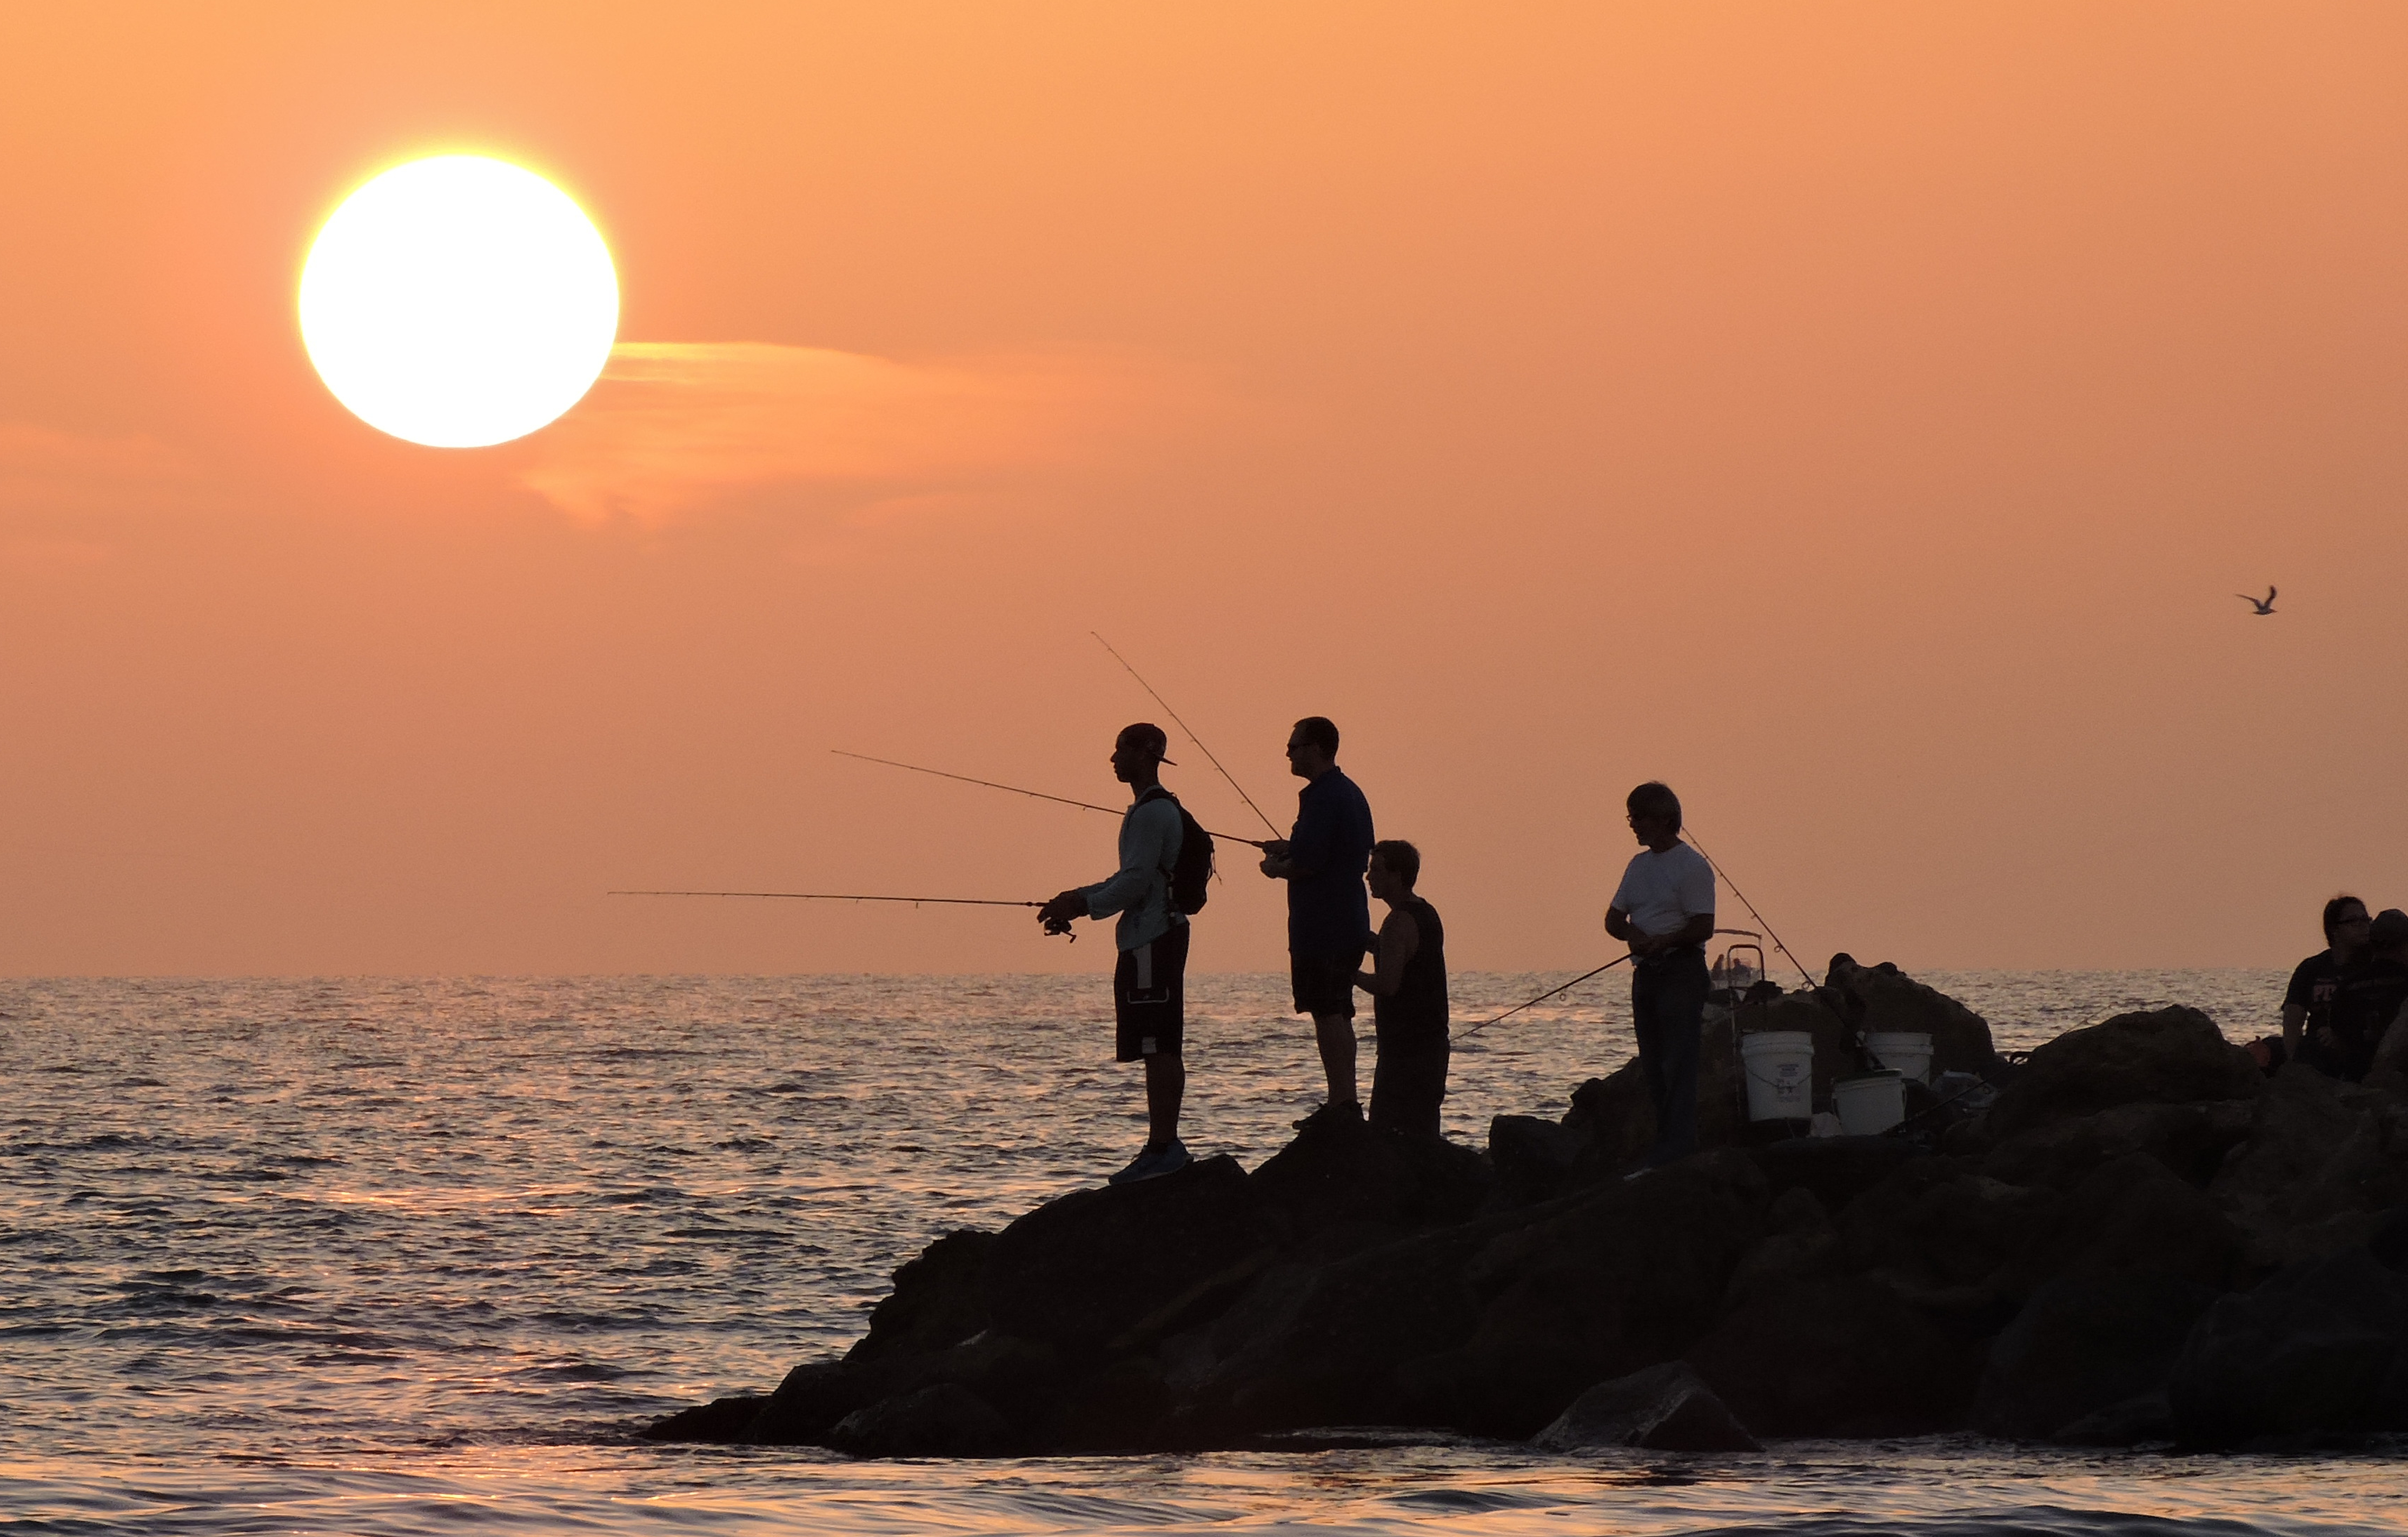 South Florida Fishermen Sunset Venice Jetty | Book Cover Pics